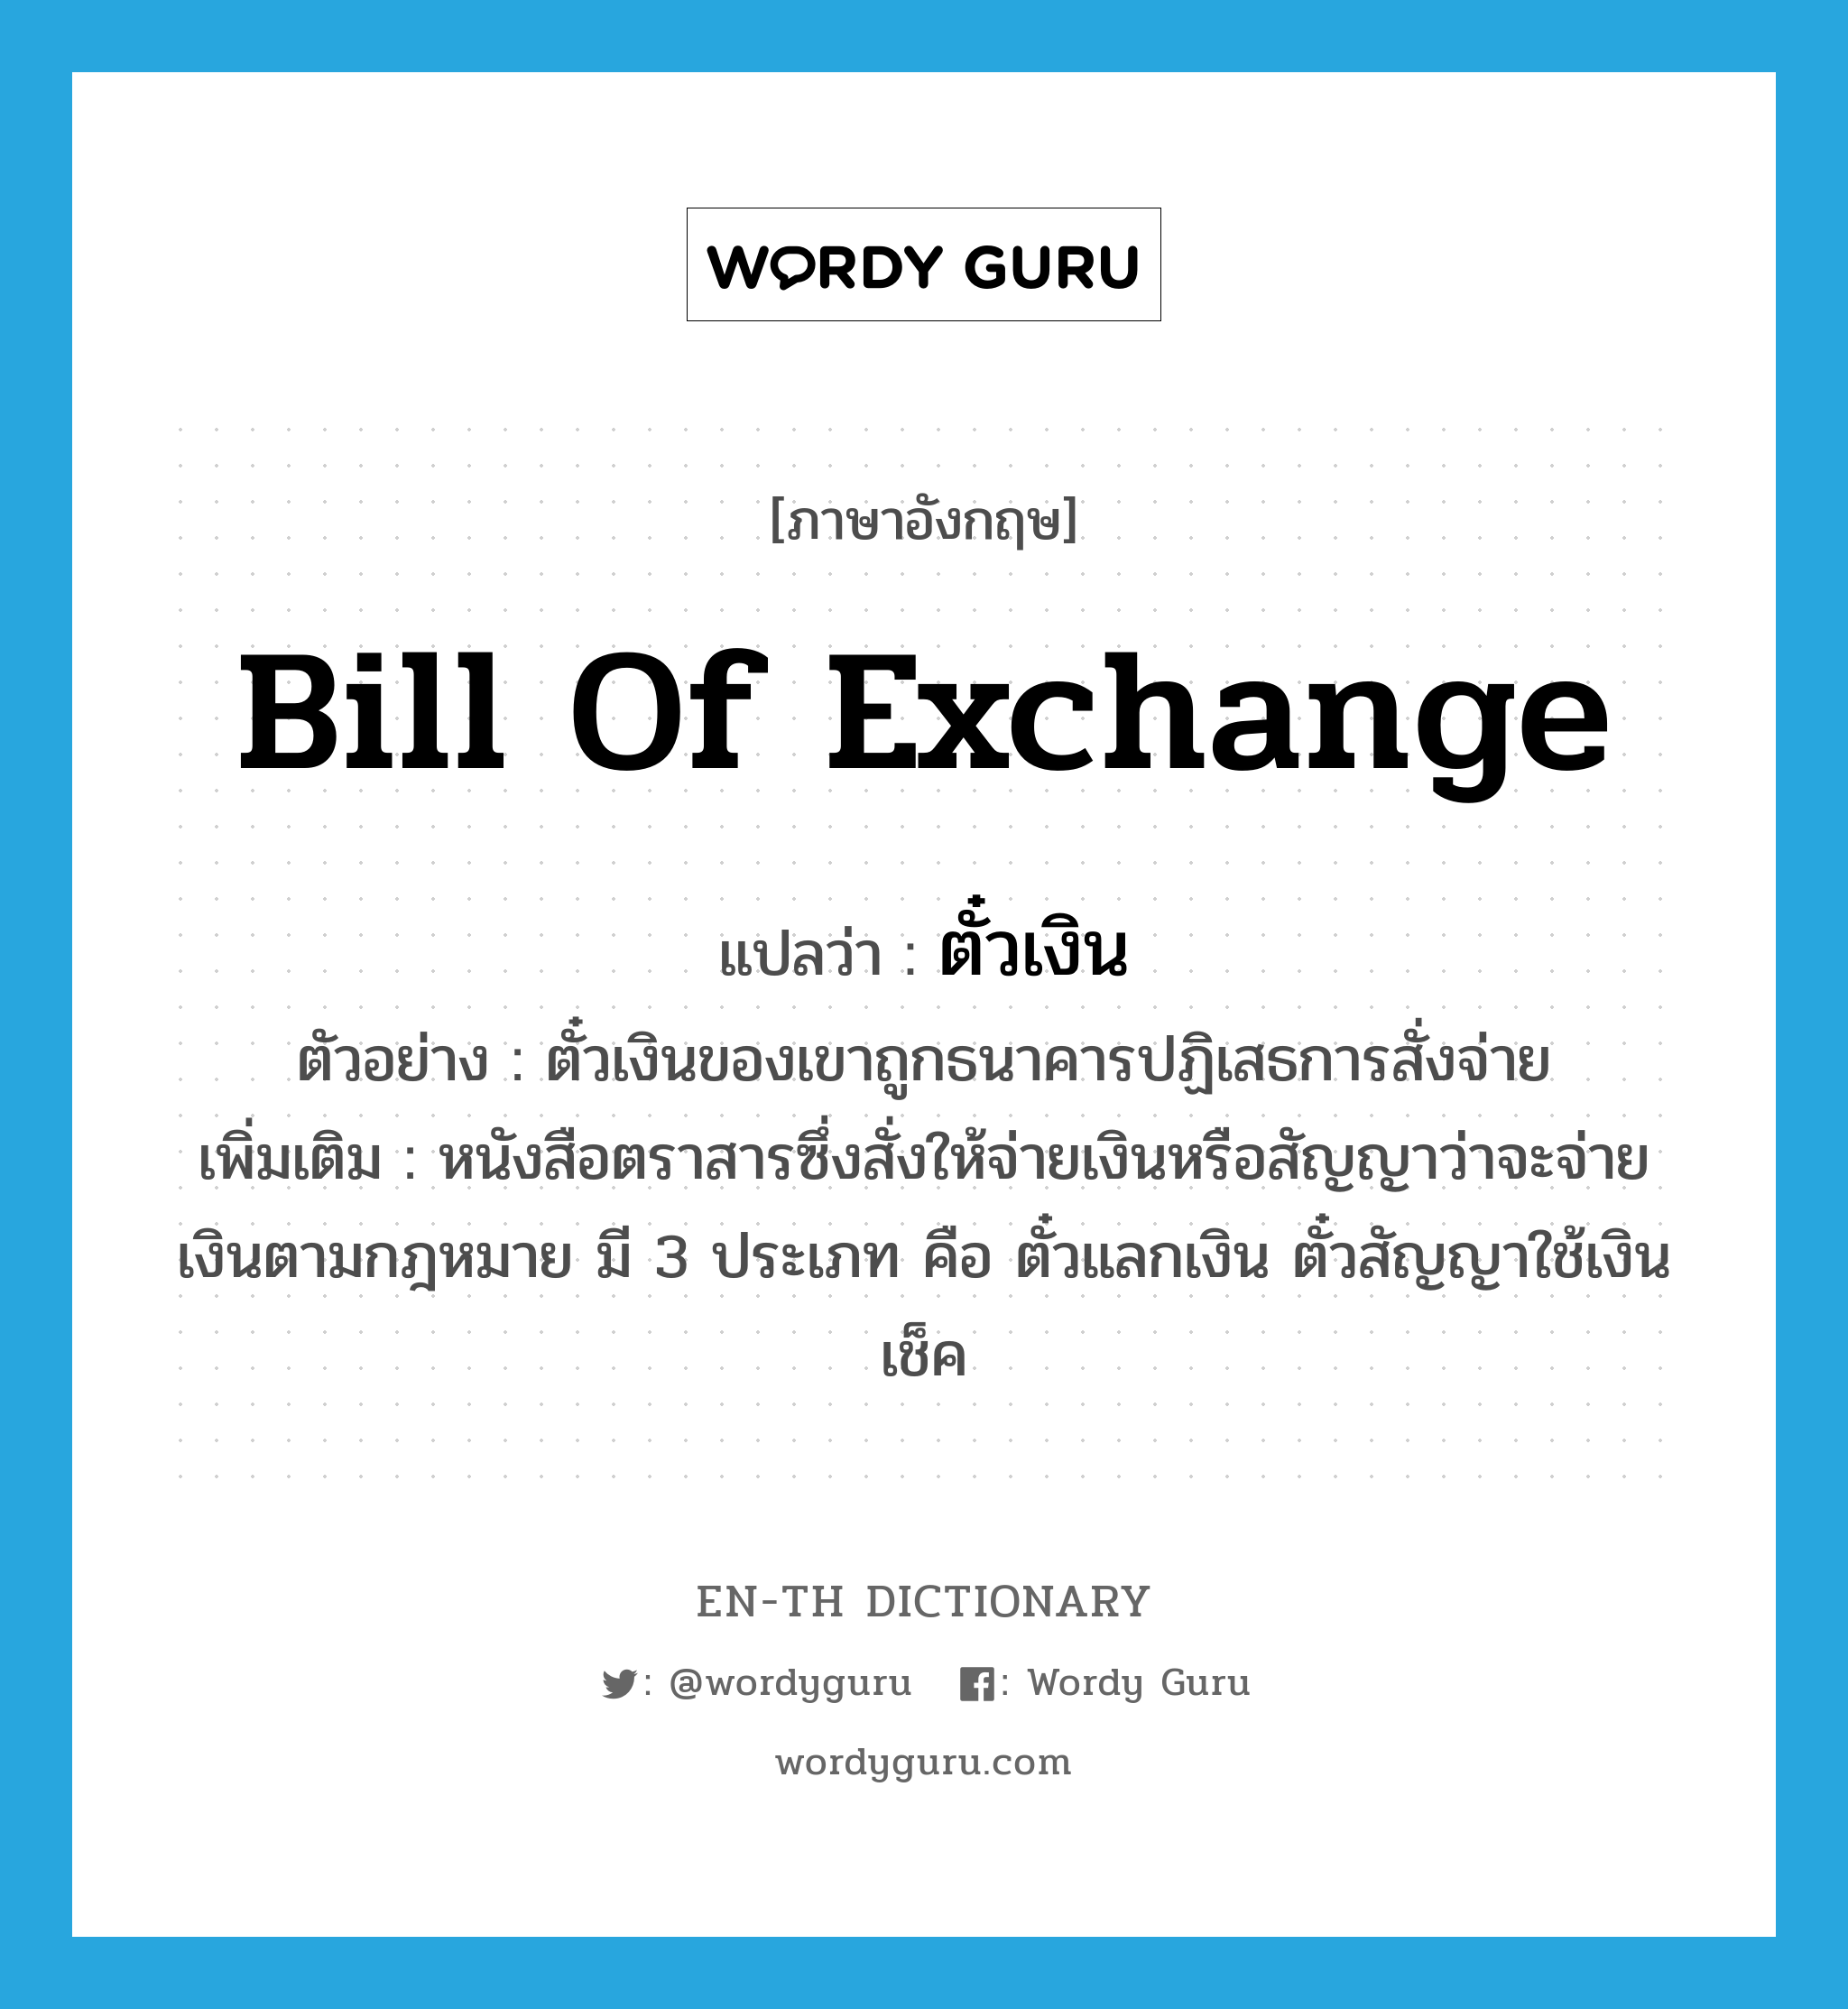 bill of exchange แปลว่า?, คำศัพท์ภาษาอังกฤษ bill of exchange แปลว่า ตั๋วเงิน ประเภท N ตัวอย่าง ตั๋วเงินของเขาถูกธนาคารปฏิเสธการสั่งจ่าย เพิ่มเติม หนังสือตราสารซึ่งสั่งให้จ่ายเงินหรือสัญญาว่าจะจ่ายเงินตามกฎหมาย มี 3 ประเภท คือ ตั๋วแลกเงิน ตั๋วสัญญาใช้เงิน เช็ค หมวด N